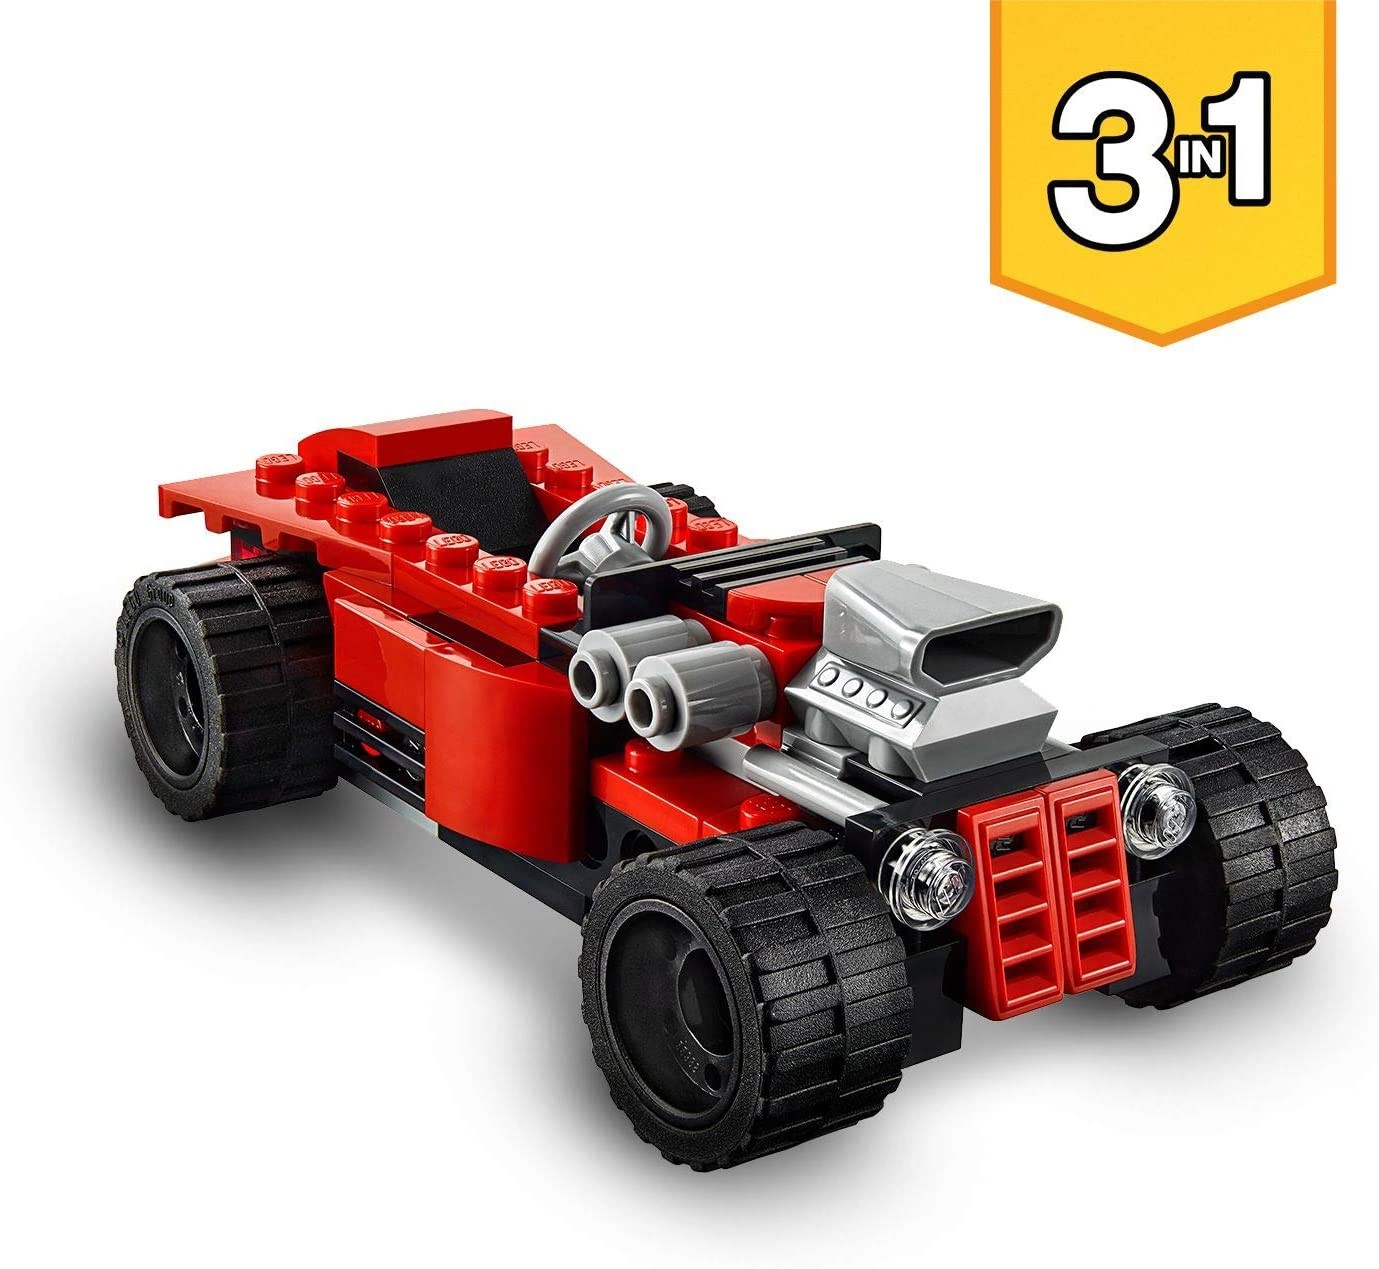 LEGO Creator 31100 - Sportwagen, 3-in-1 Sets, Sportwagen-, Hot Rod-, Flieger-Bauset, 134 Teile